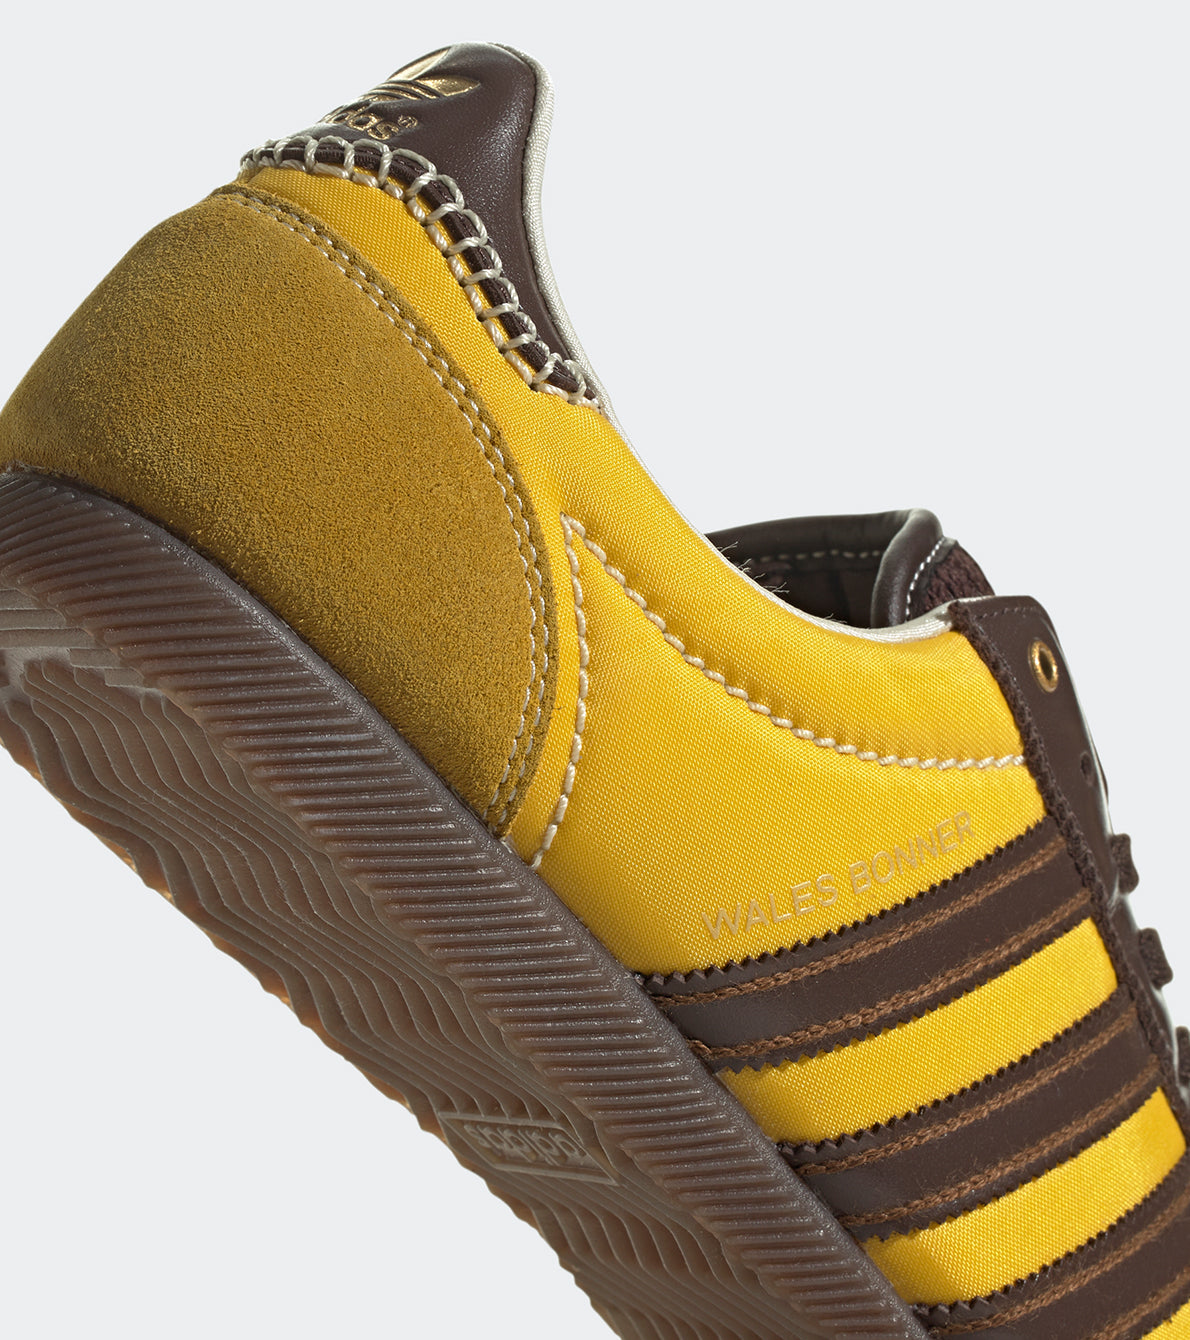 Adidas wales bonner кроссовки. Wales Bonner adidas кроссовки. Adidas Wales Bonner Japan кроссовки. Adidas Wales Bonner кеды. Adidas Yellow Shoes.